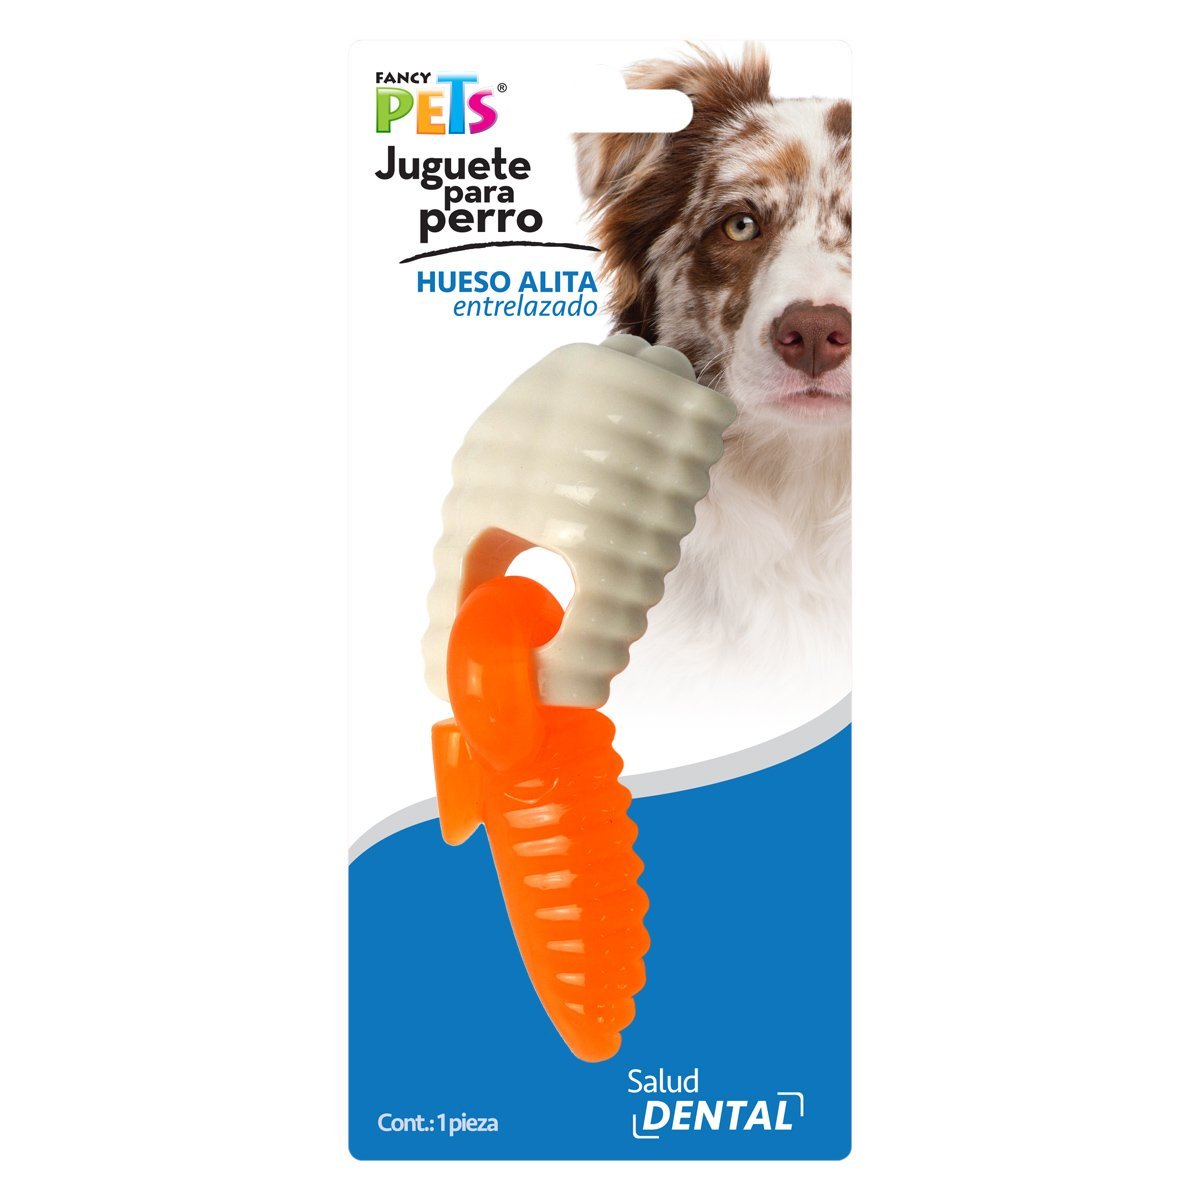 Juguete Dental Hueso/alita Entrelazado Fancy Pets Mod. Fl8759